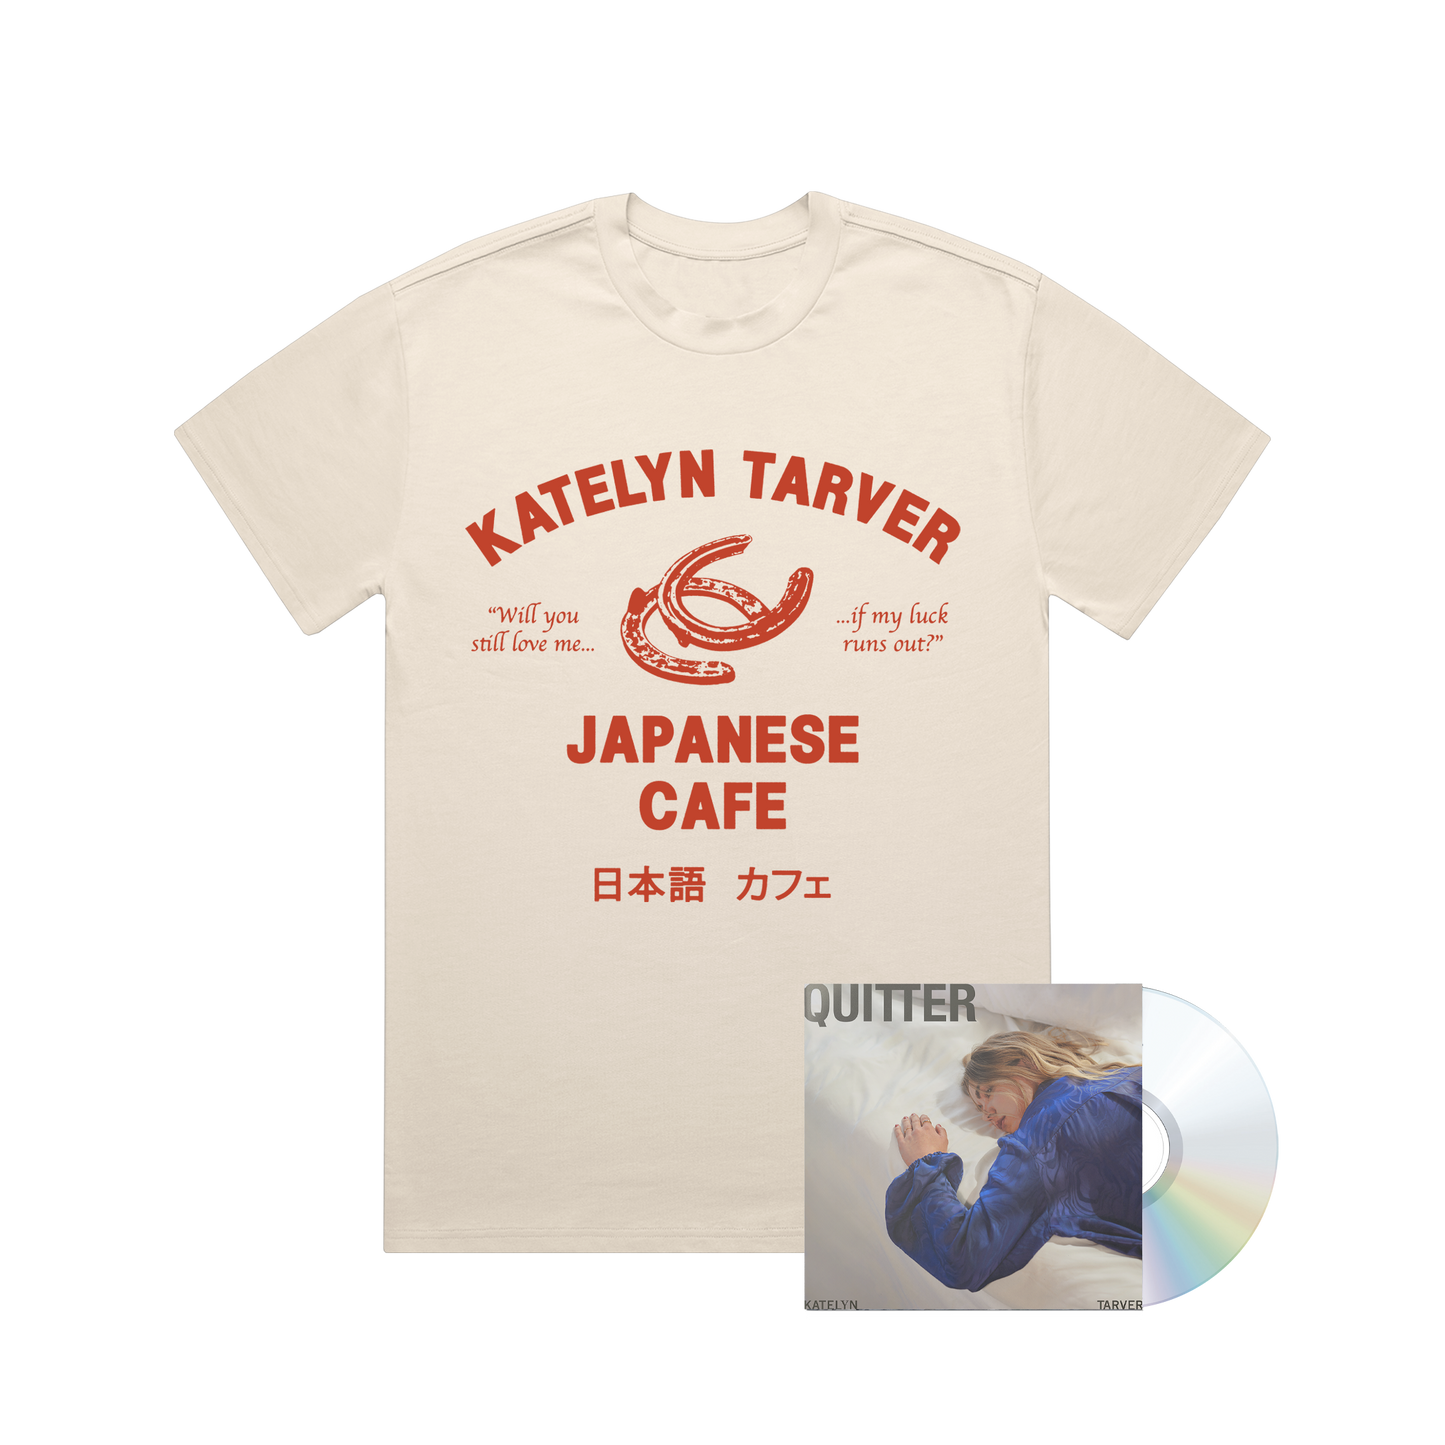 Japanese Cafe T-Shirt & Quitter CD Bundle